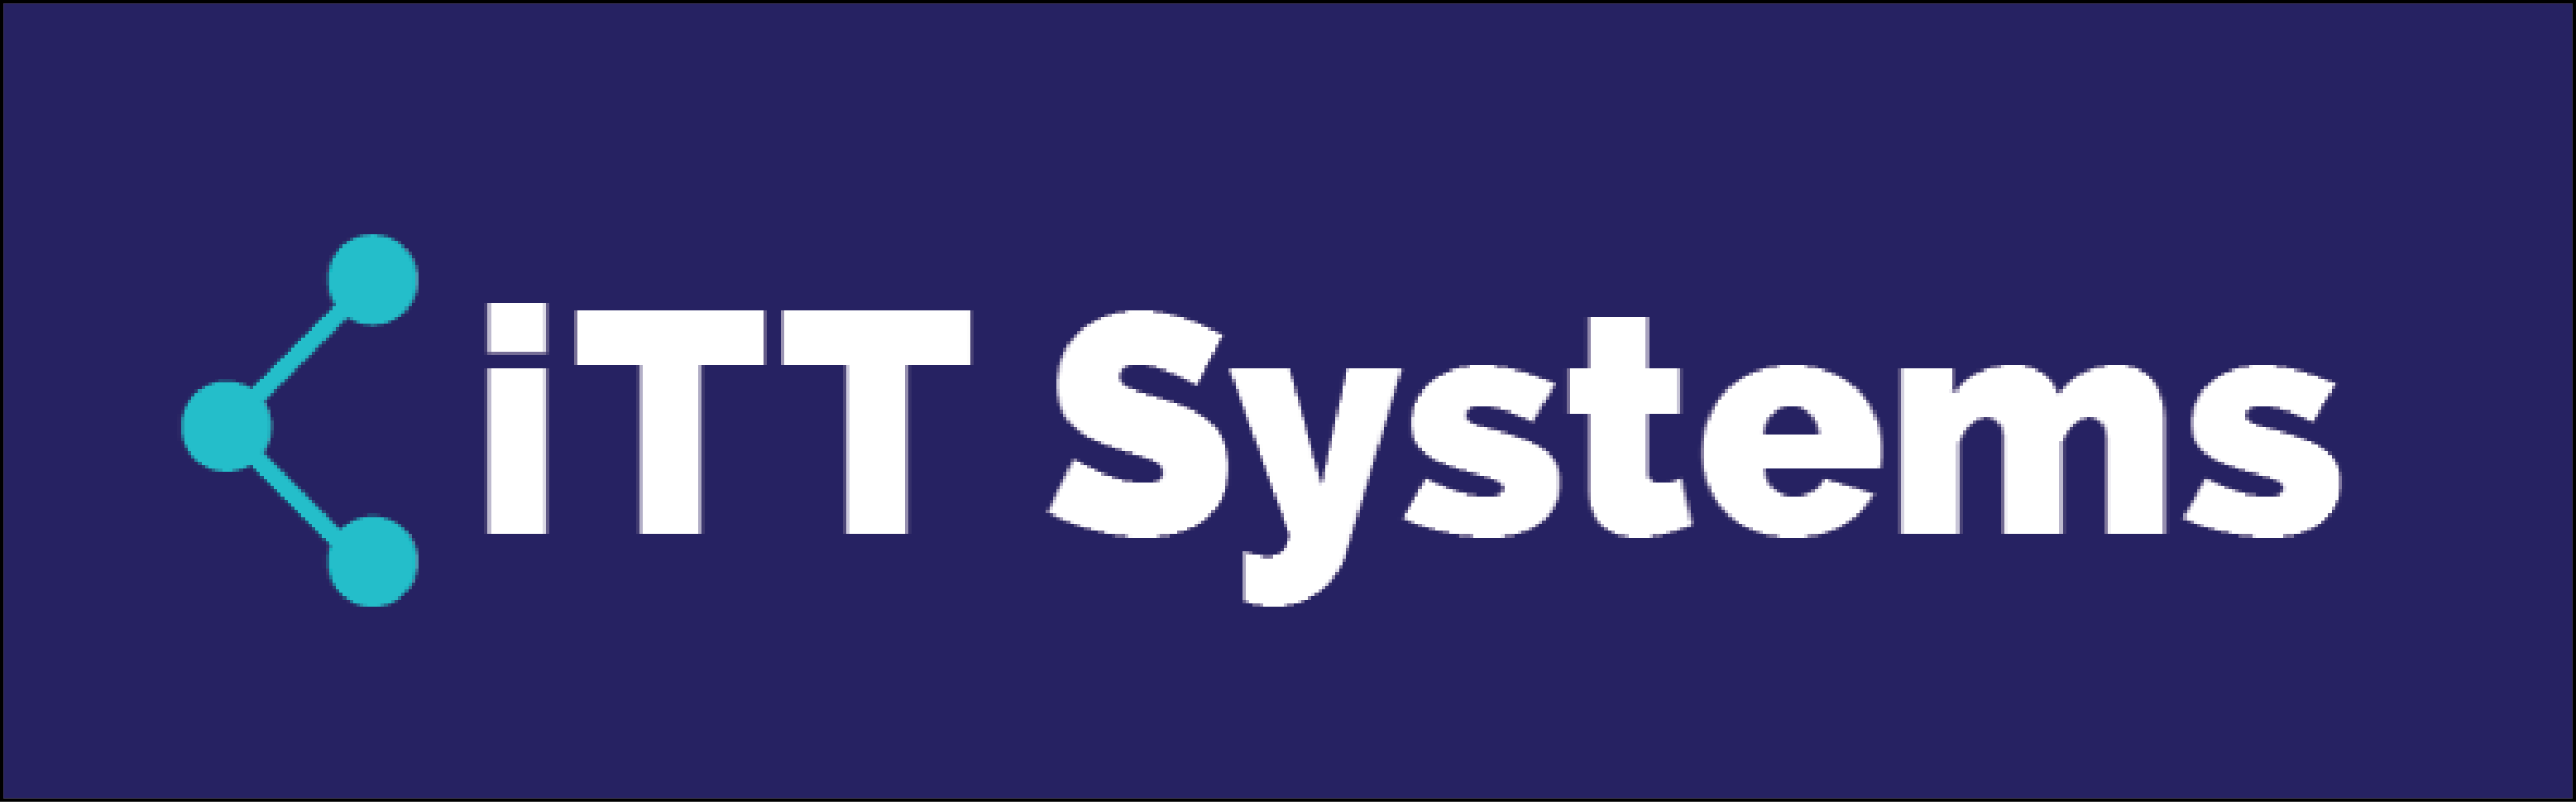 ITT Systems — List of Best Event Log Analysis Tools 2020